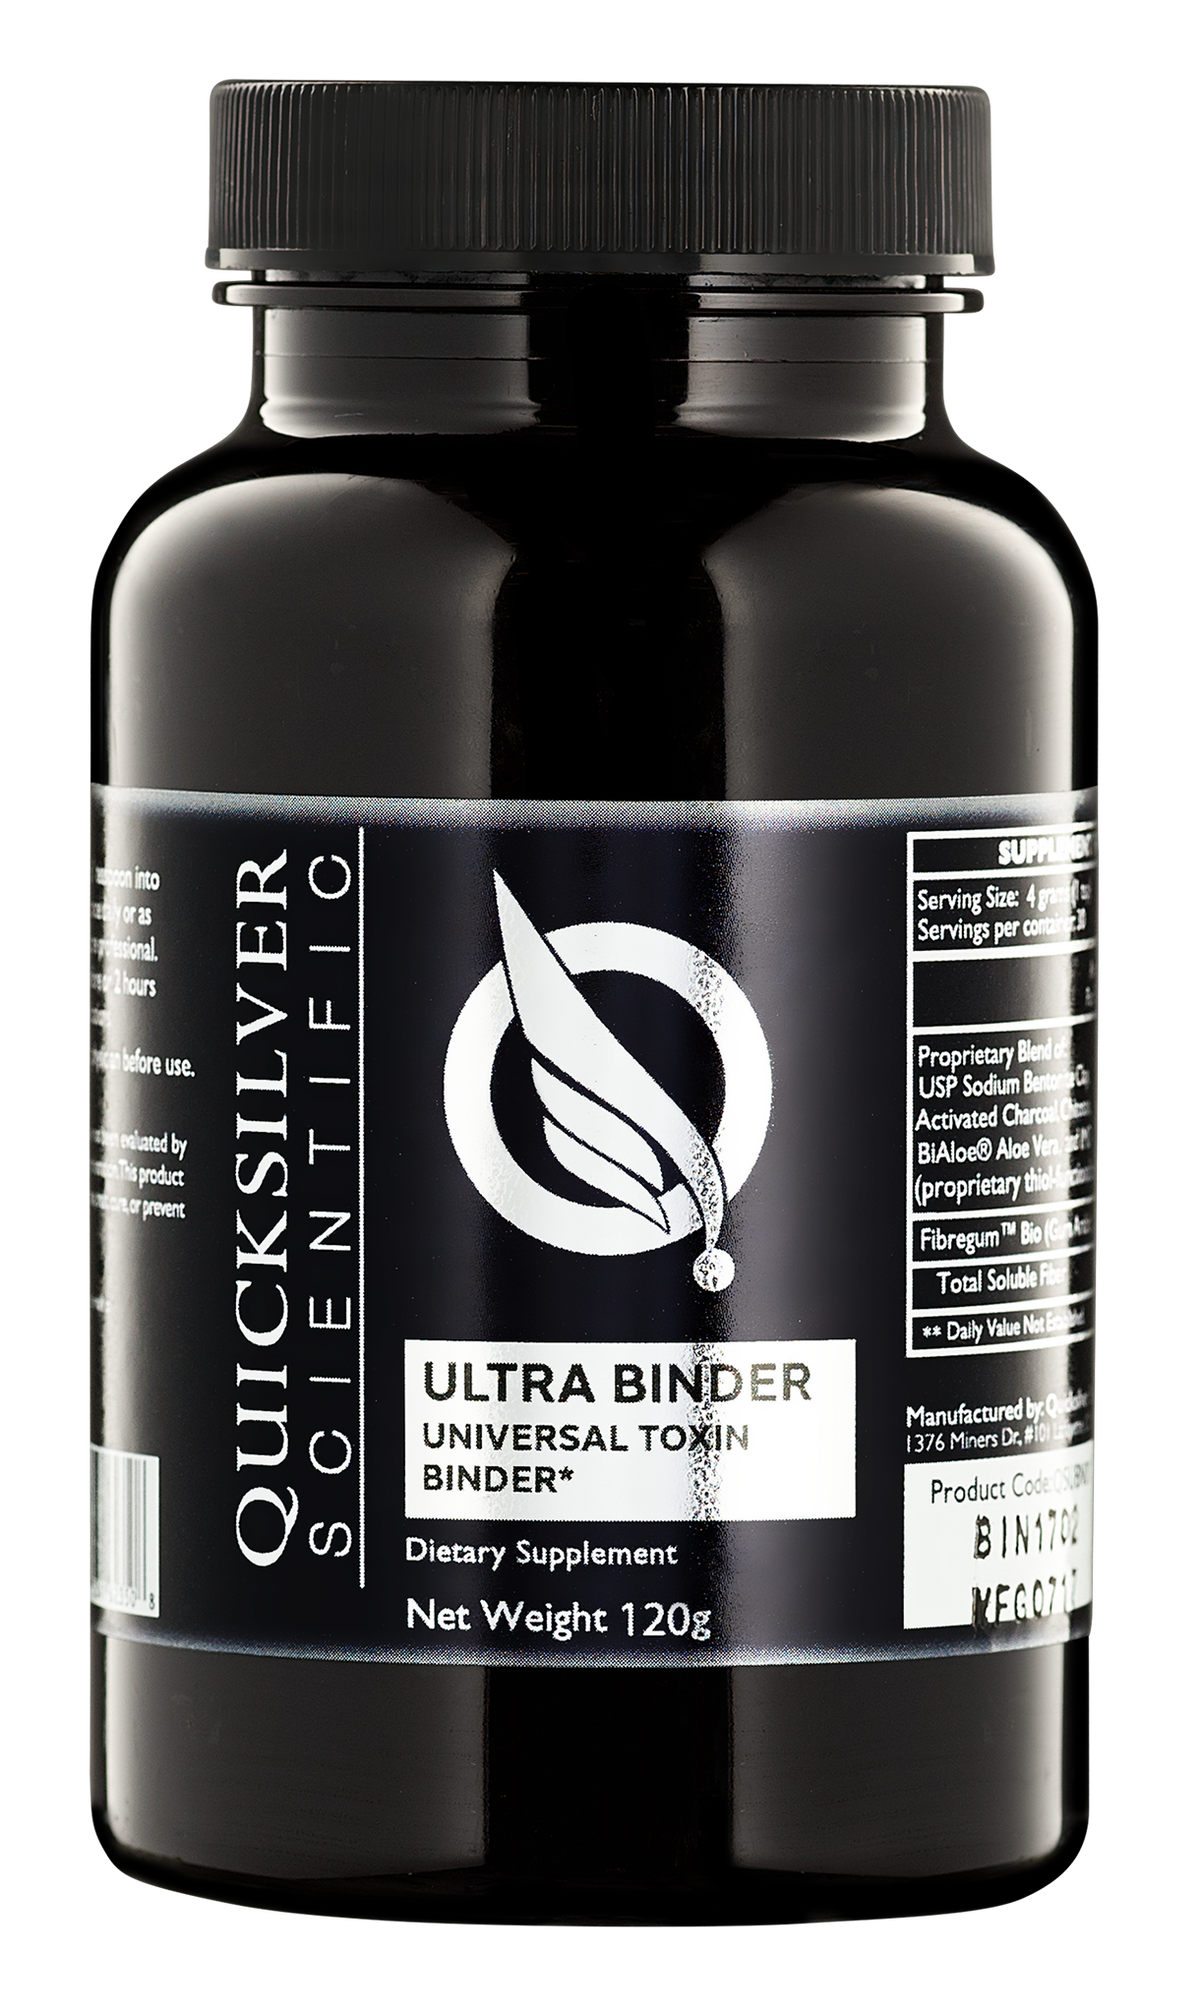 Universal Toxin Binder* - Ultra Binder - 120g